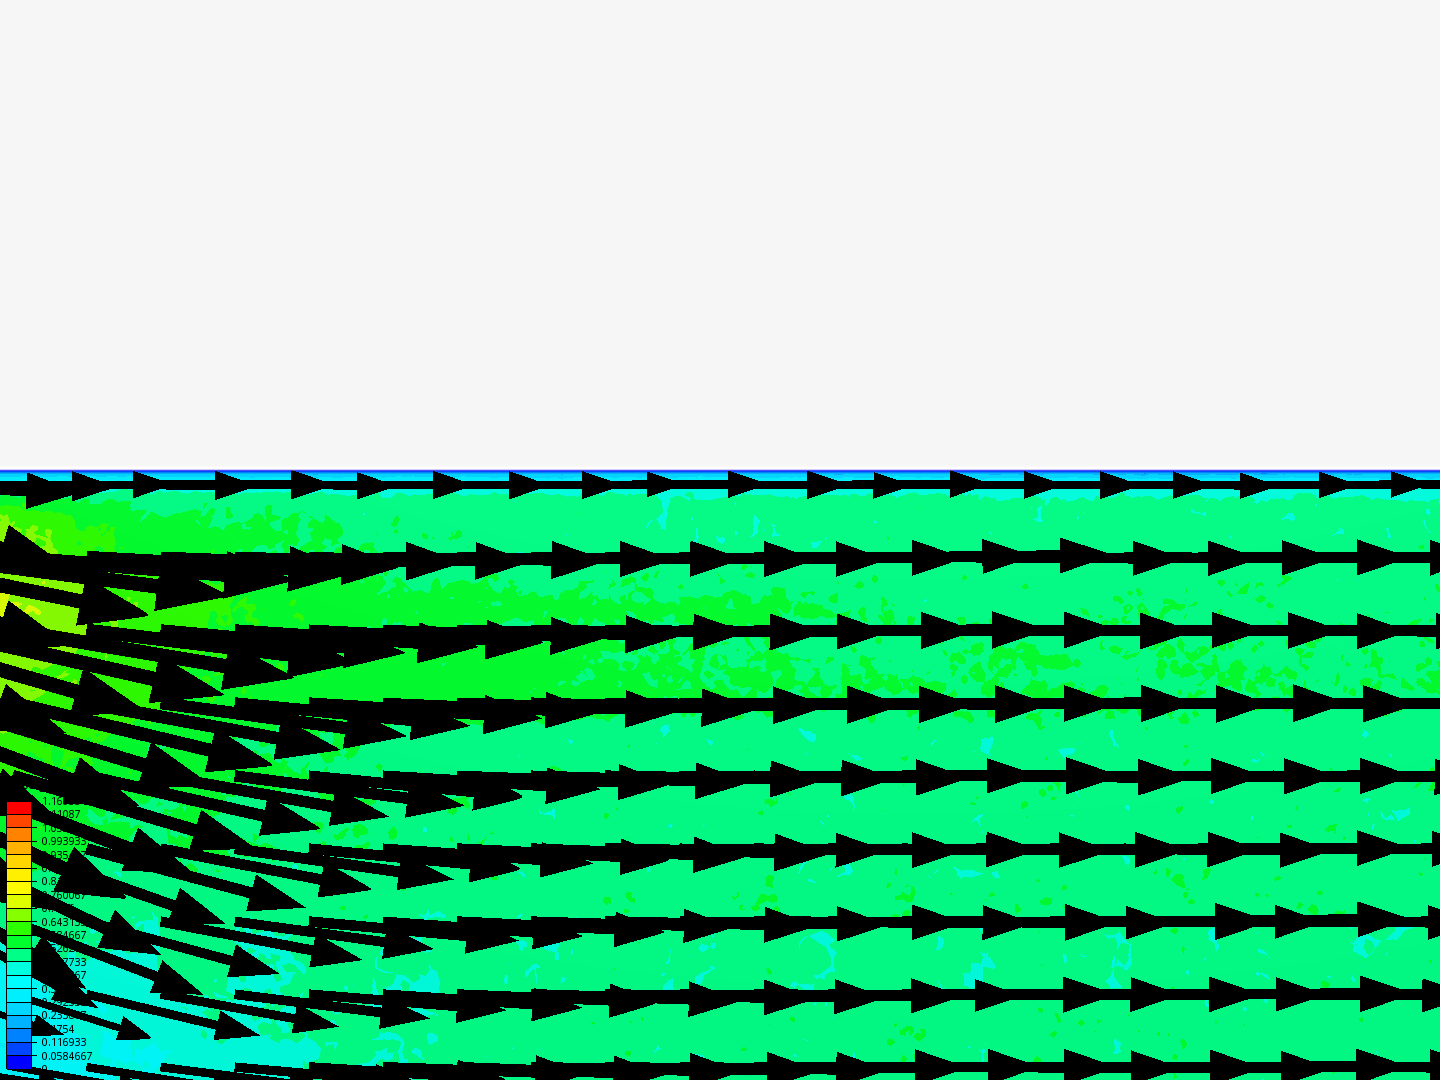 Microfluidic Channel Test image